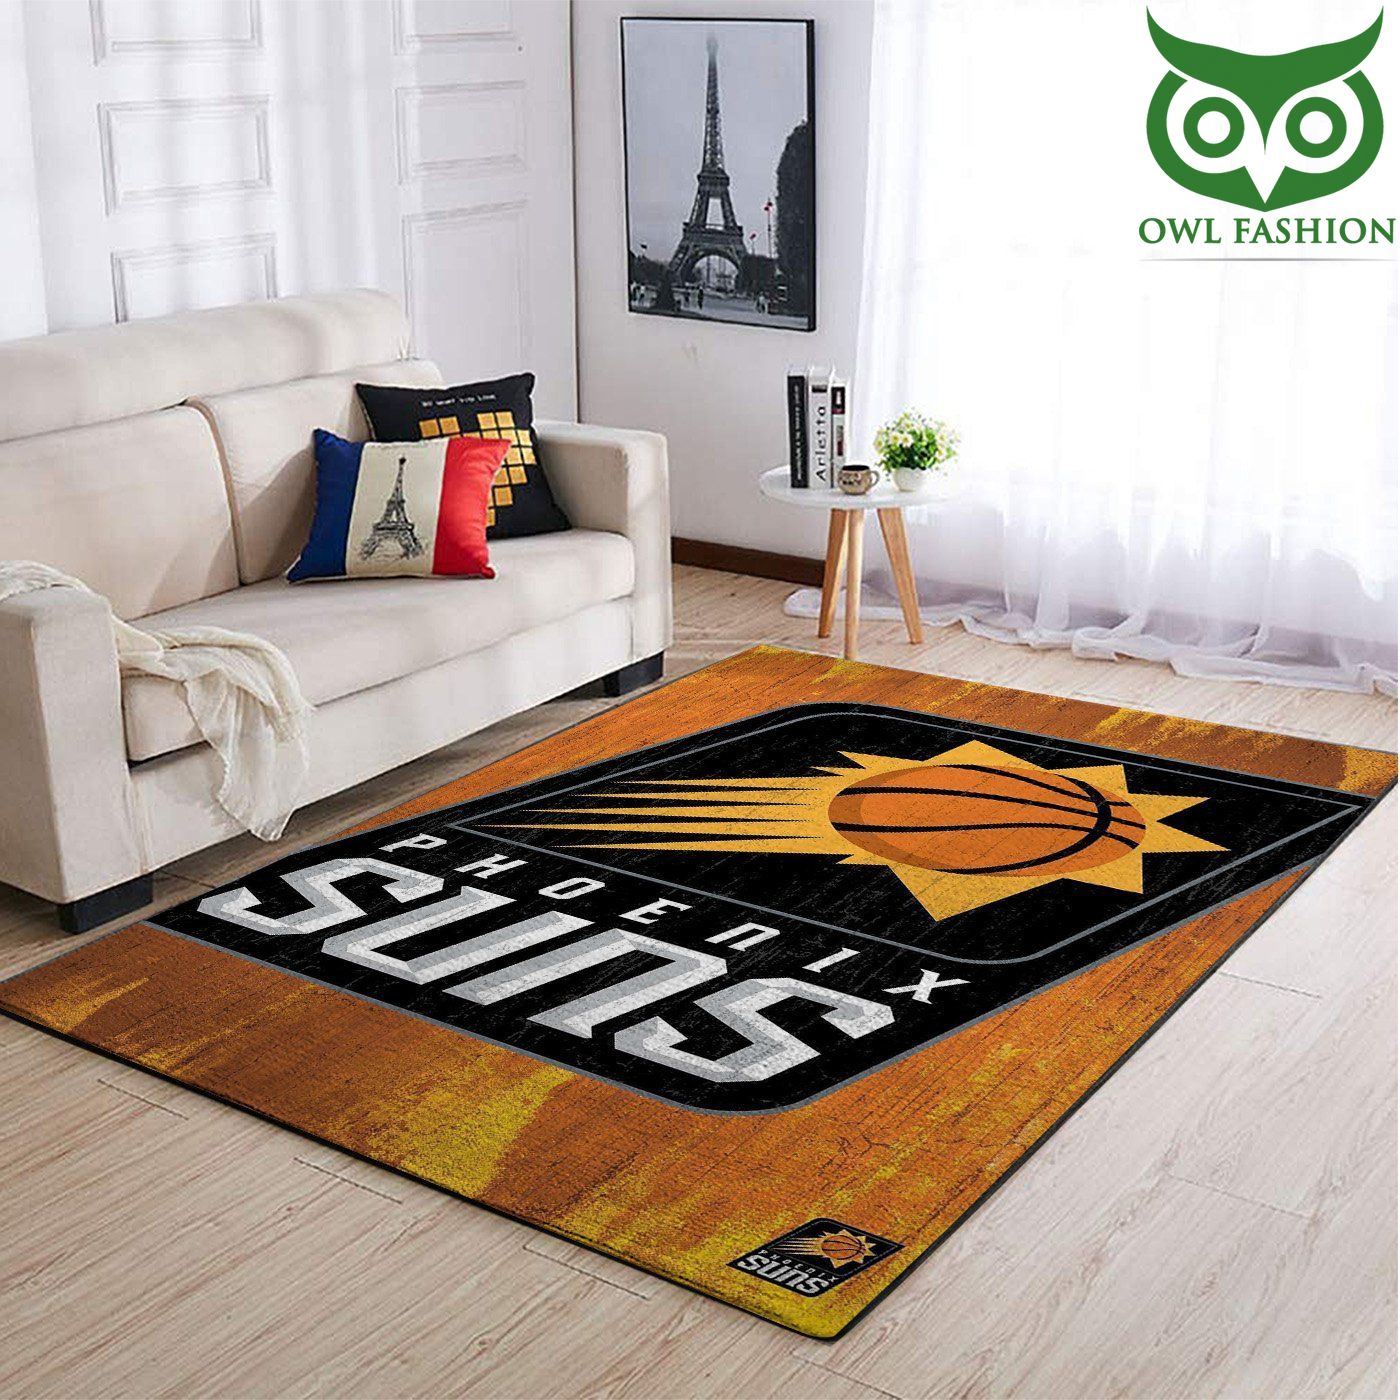 Phoenix Suns Nba Team Logo Style Nice Gift carpet rug Home and floor Decoration